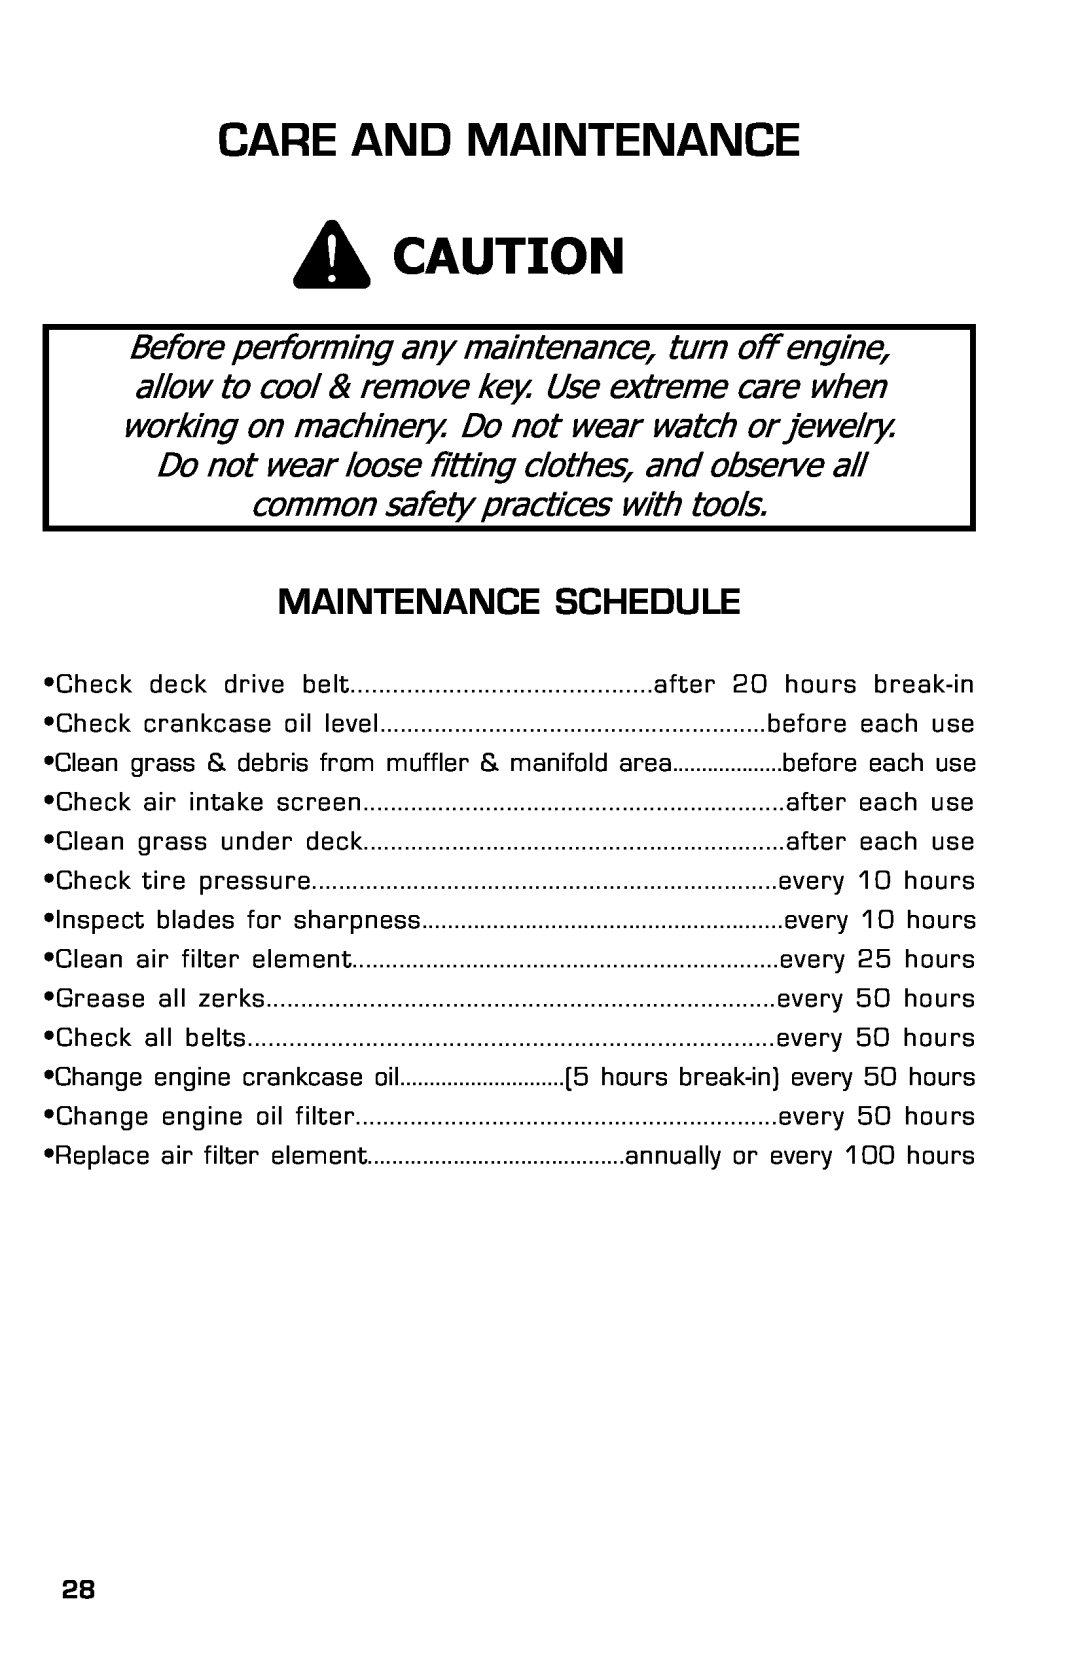 Dixon 2004 manual Care And Maintenance, Maintenance Schedule 